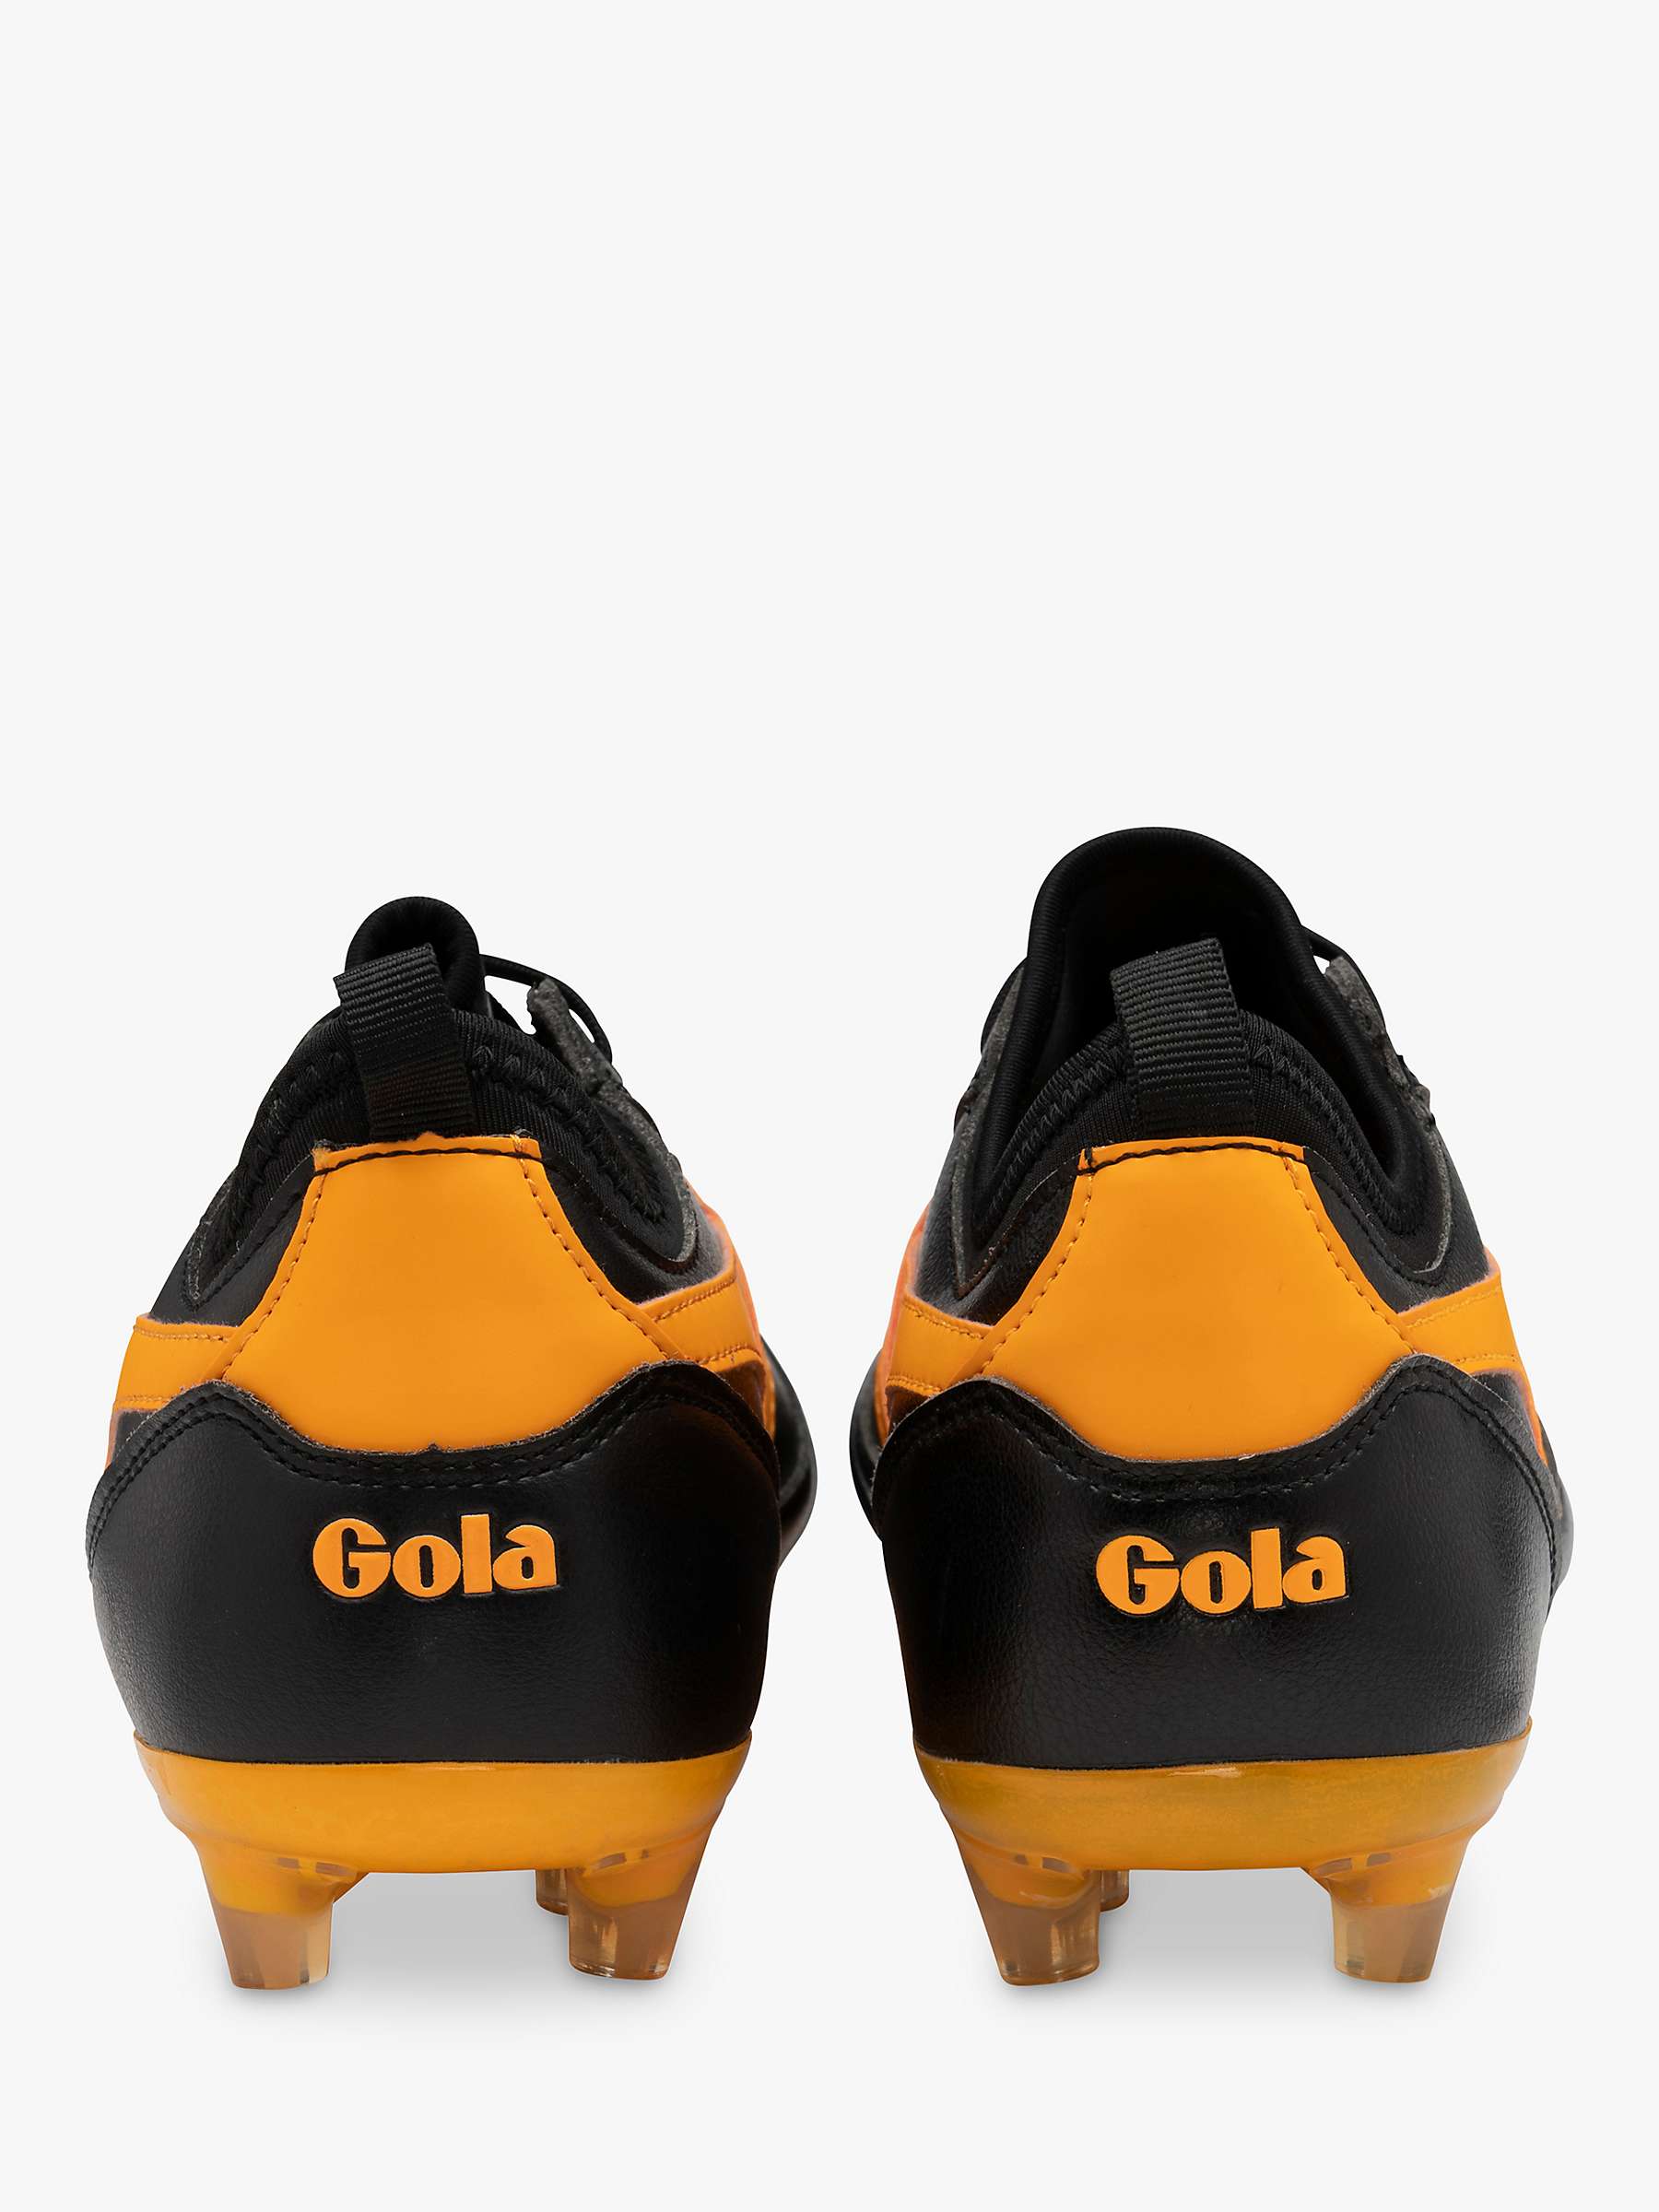 Buy Gola Kids' Performance Ceptor MLD Pro Football Boots, Black/Sun Online at johnlewis.com